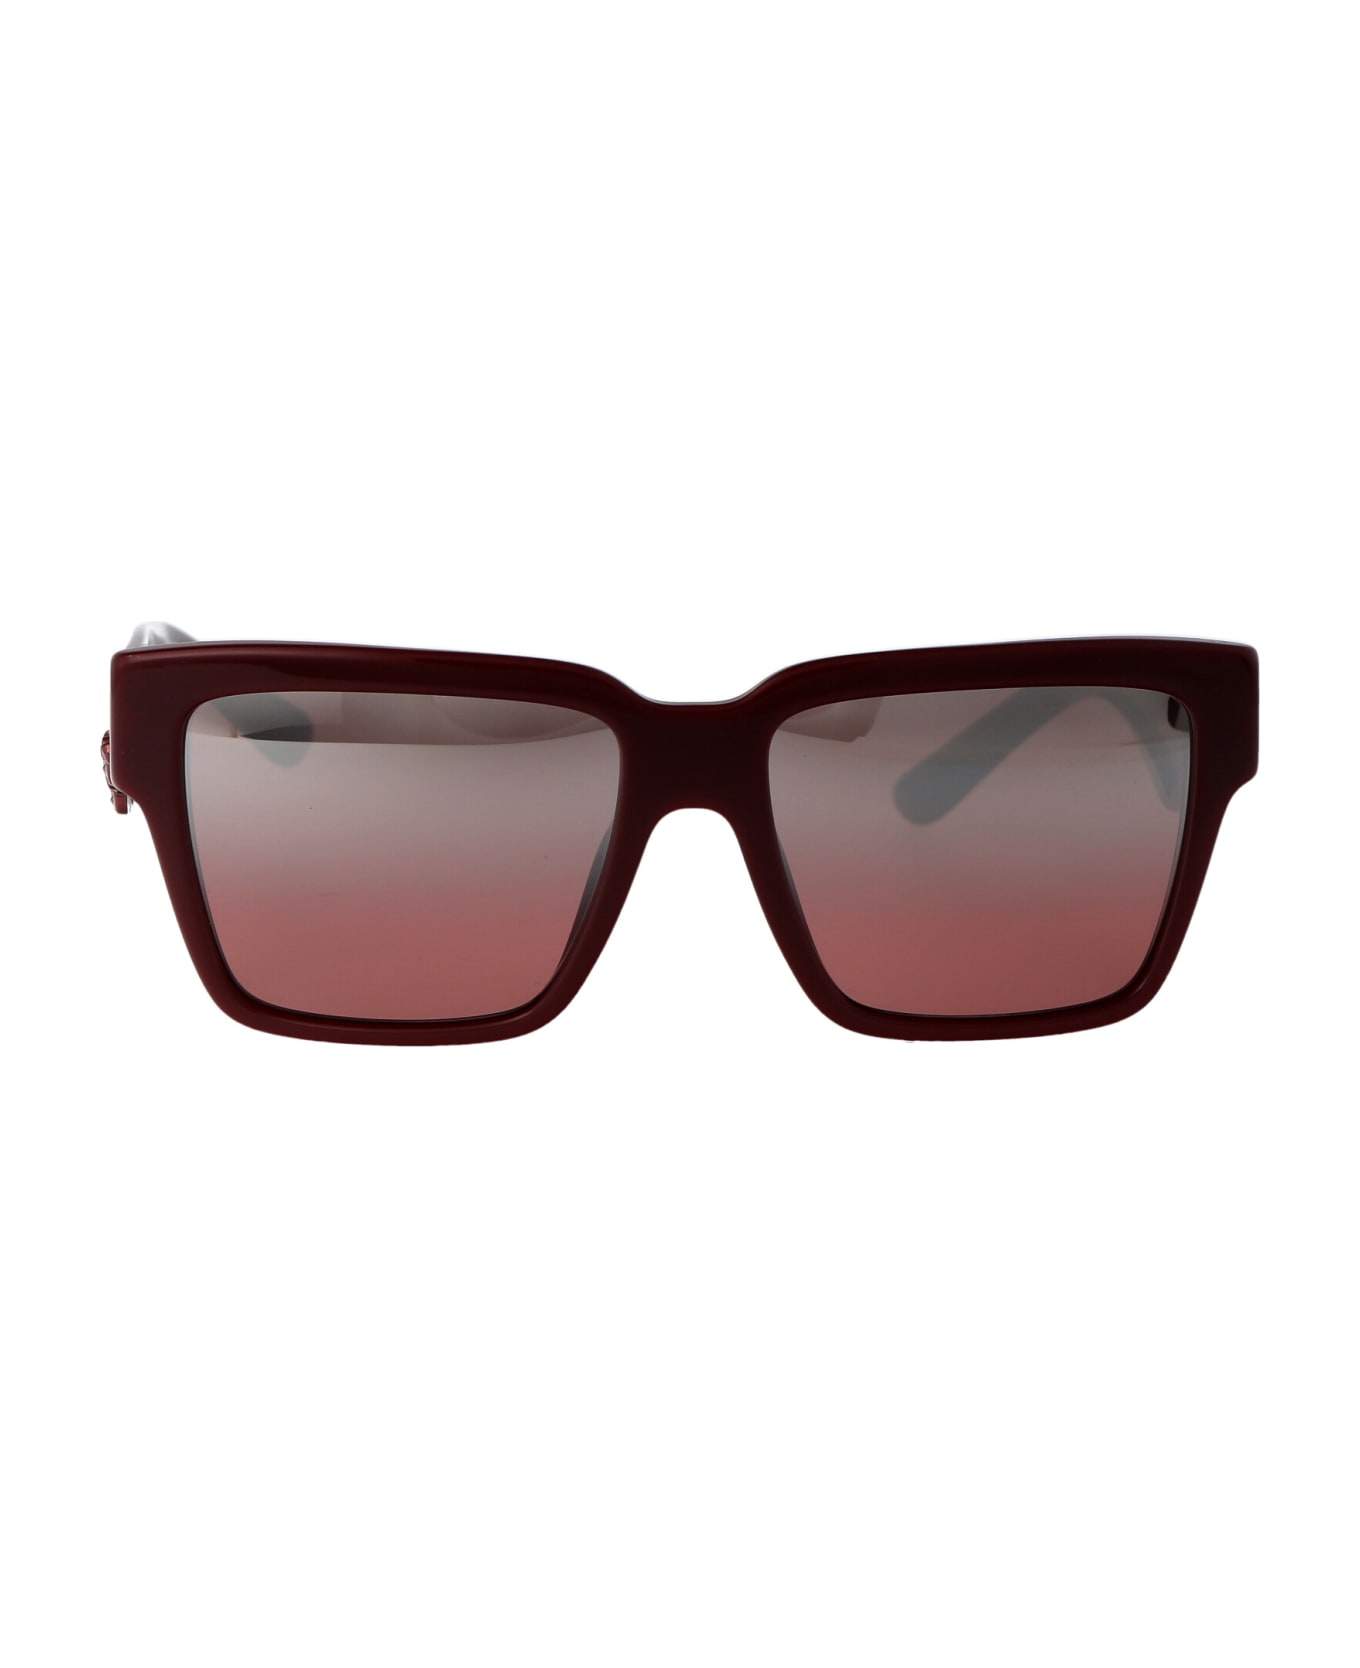 Dolce & Gabbana Eyewear 0dg4436 Sunglasses - 30917E Bordeuax